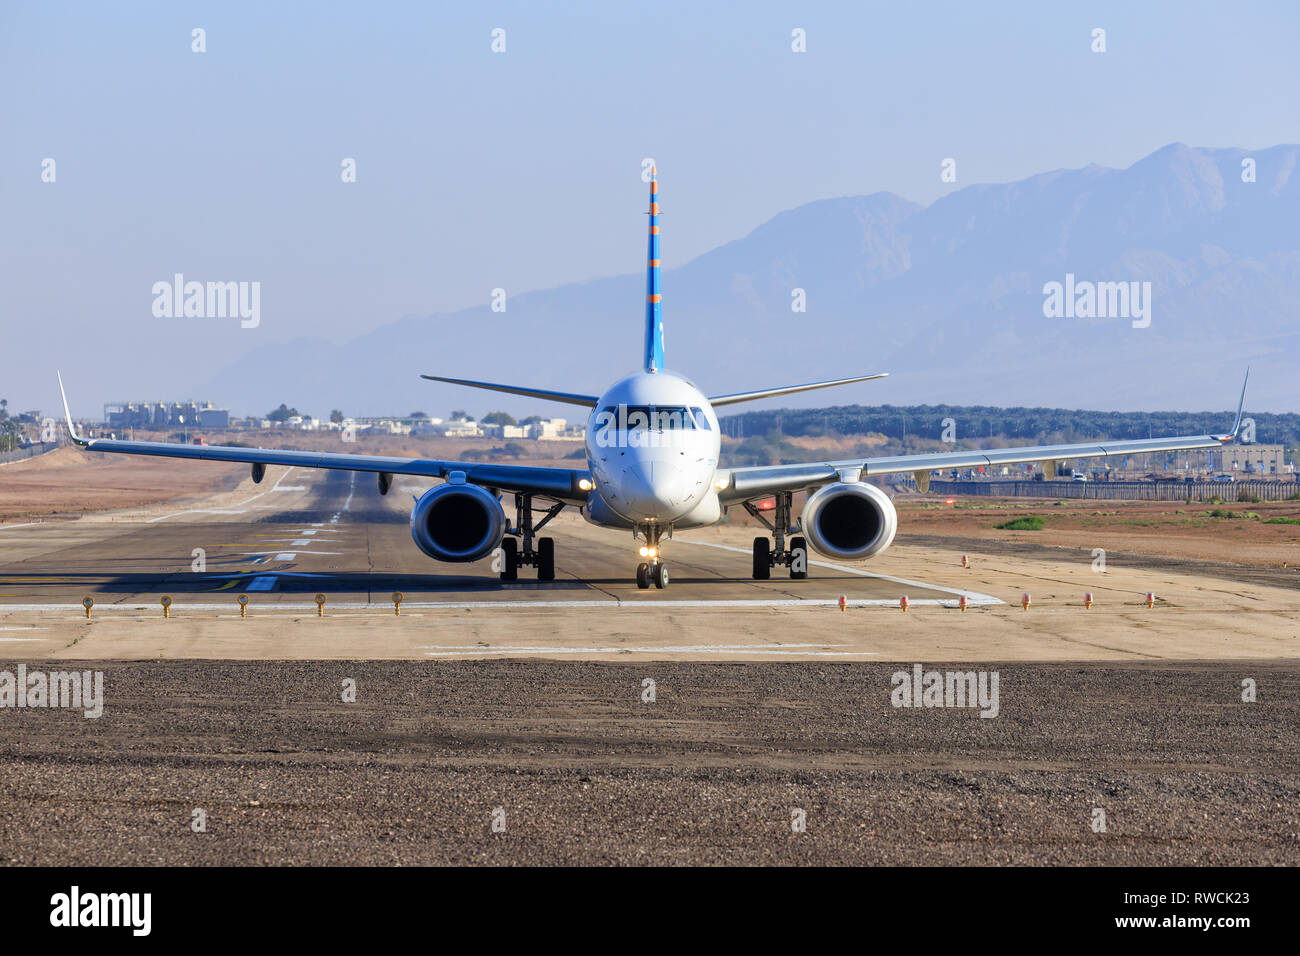 Eilat, Israël - 24 février 2019, à l'ancienne Emraer Arkia : Eilat Aéroport international. Banque D'Images